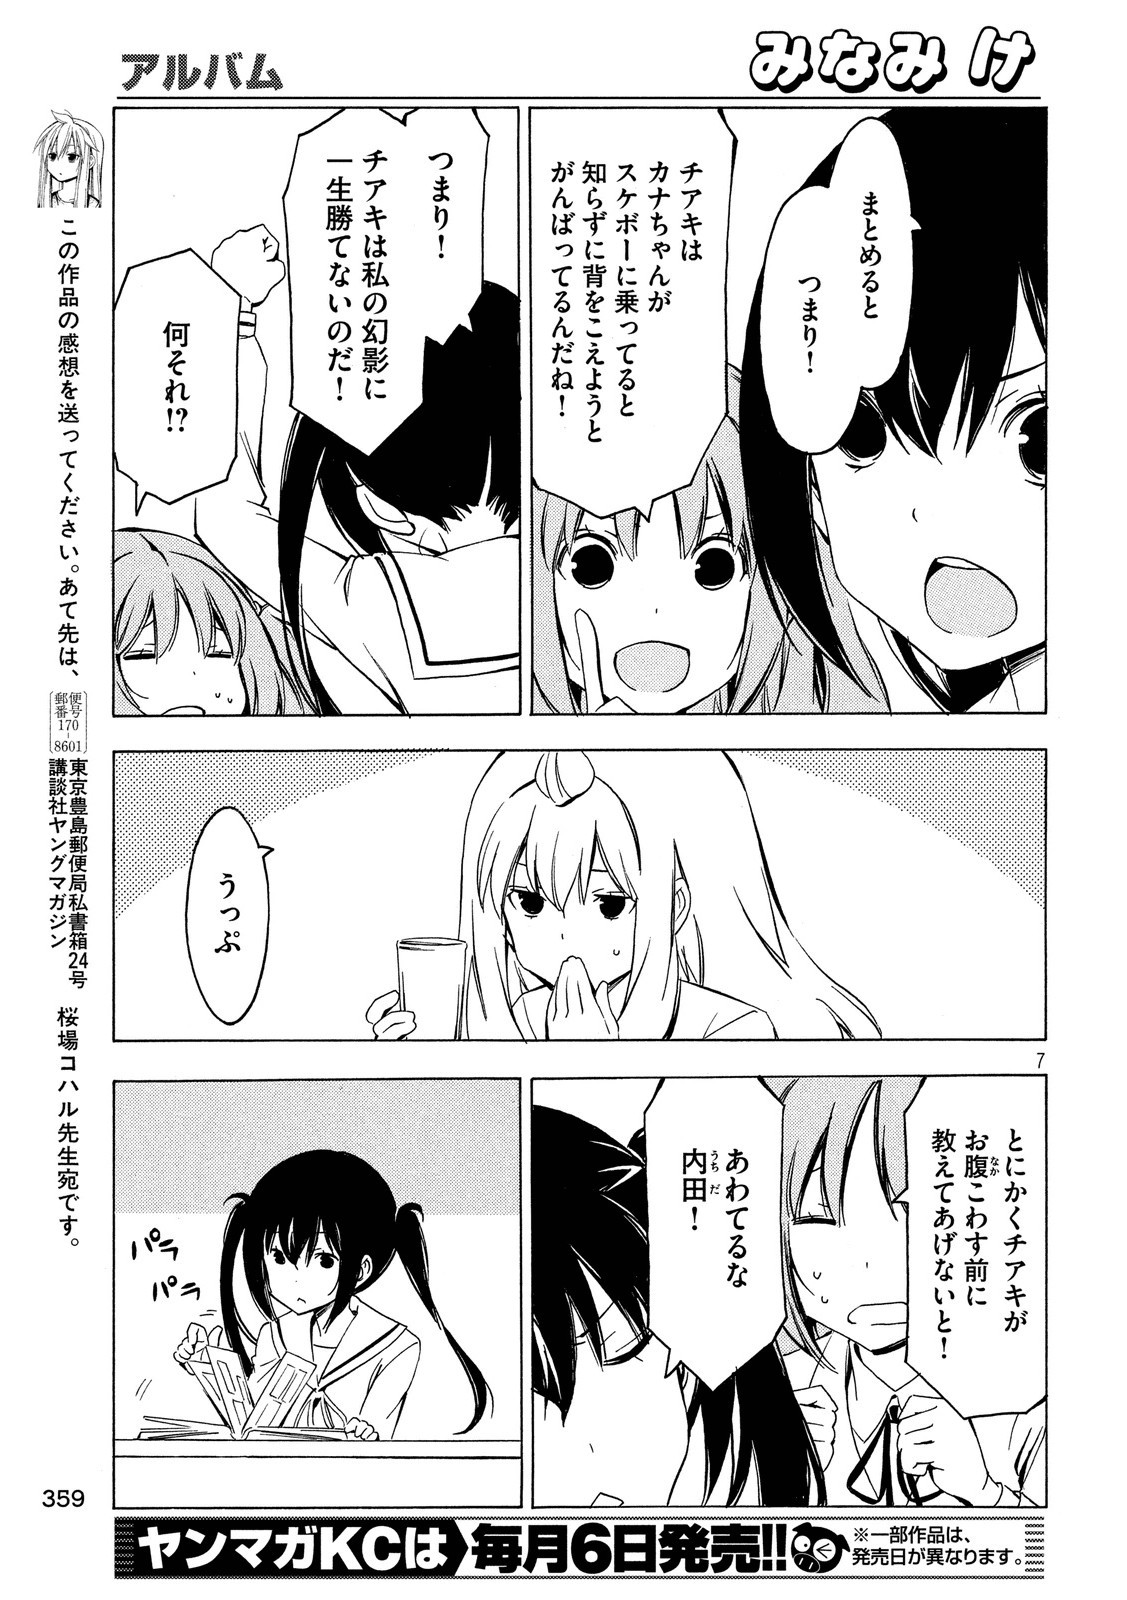 Minami-ke - Chapter 279 - Page 7